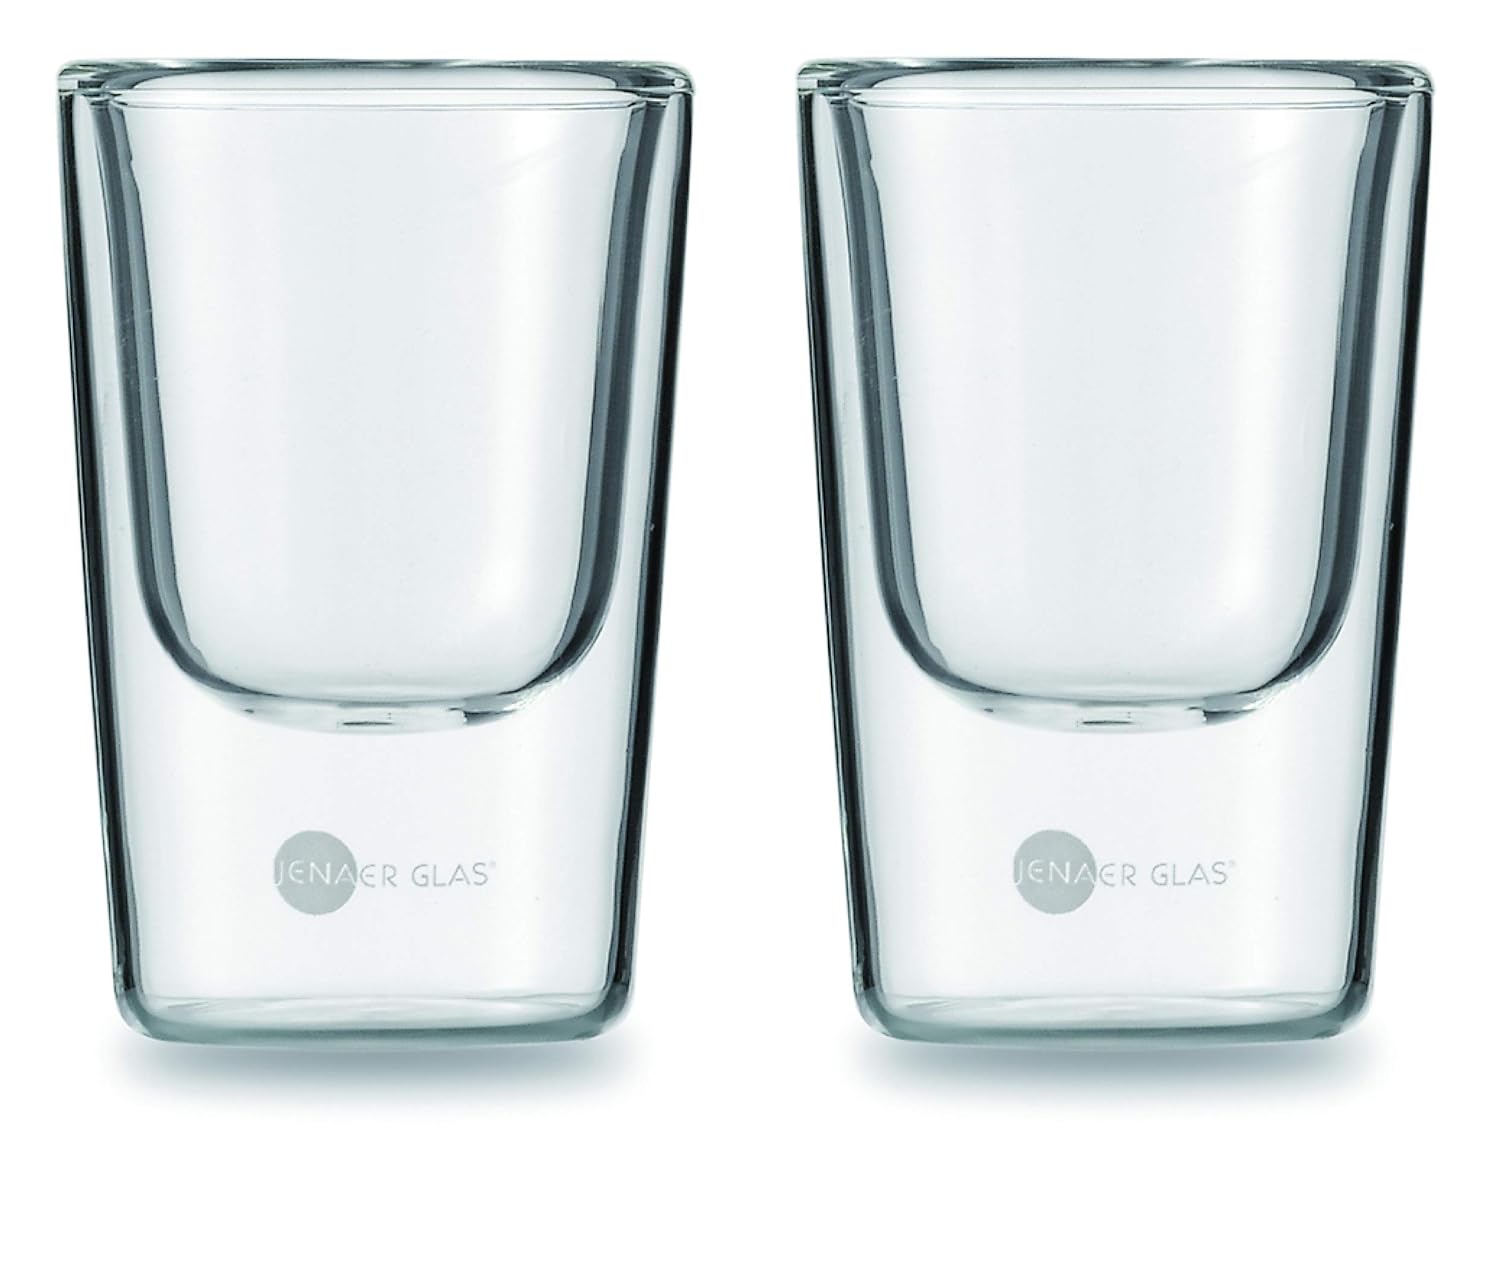 Jenaer glass mug, 2 units, glass, transparent, 12.6 x 6.4 x 9.5 cm